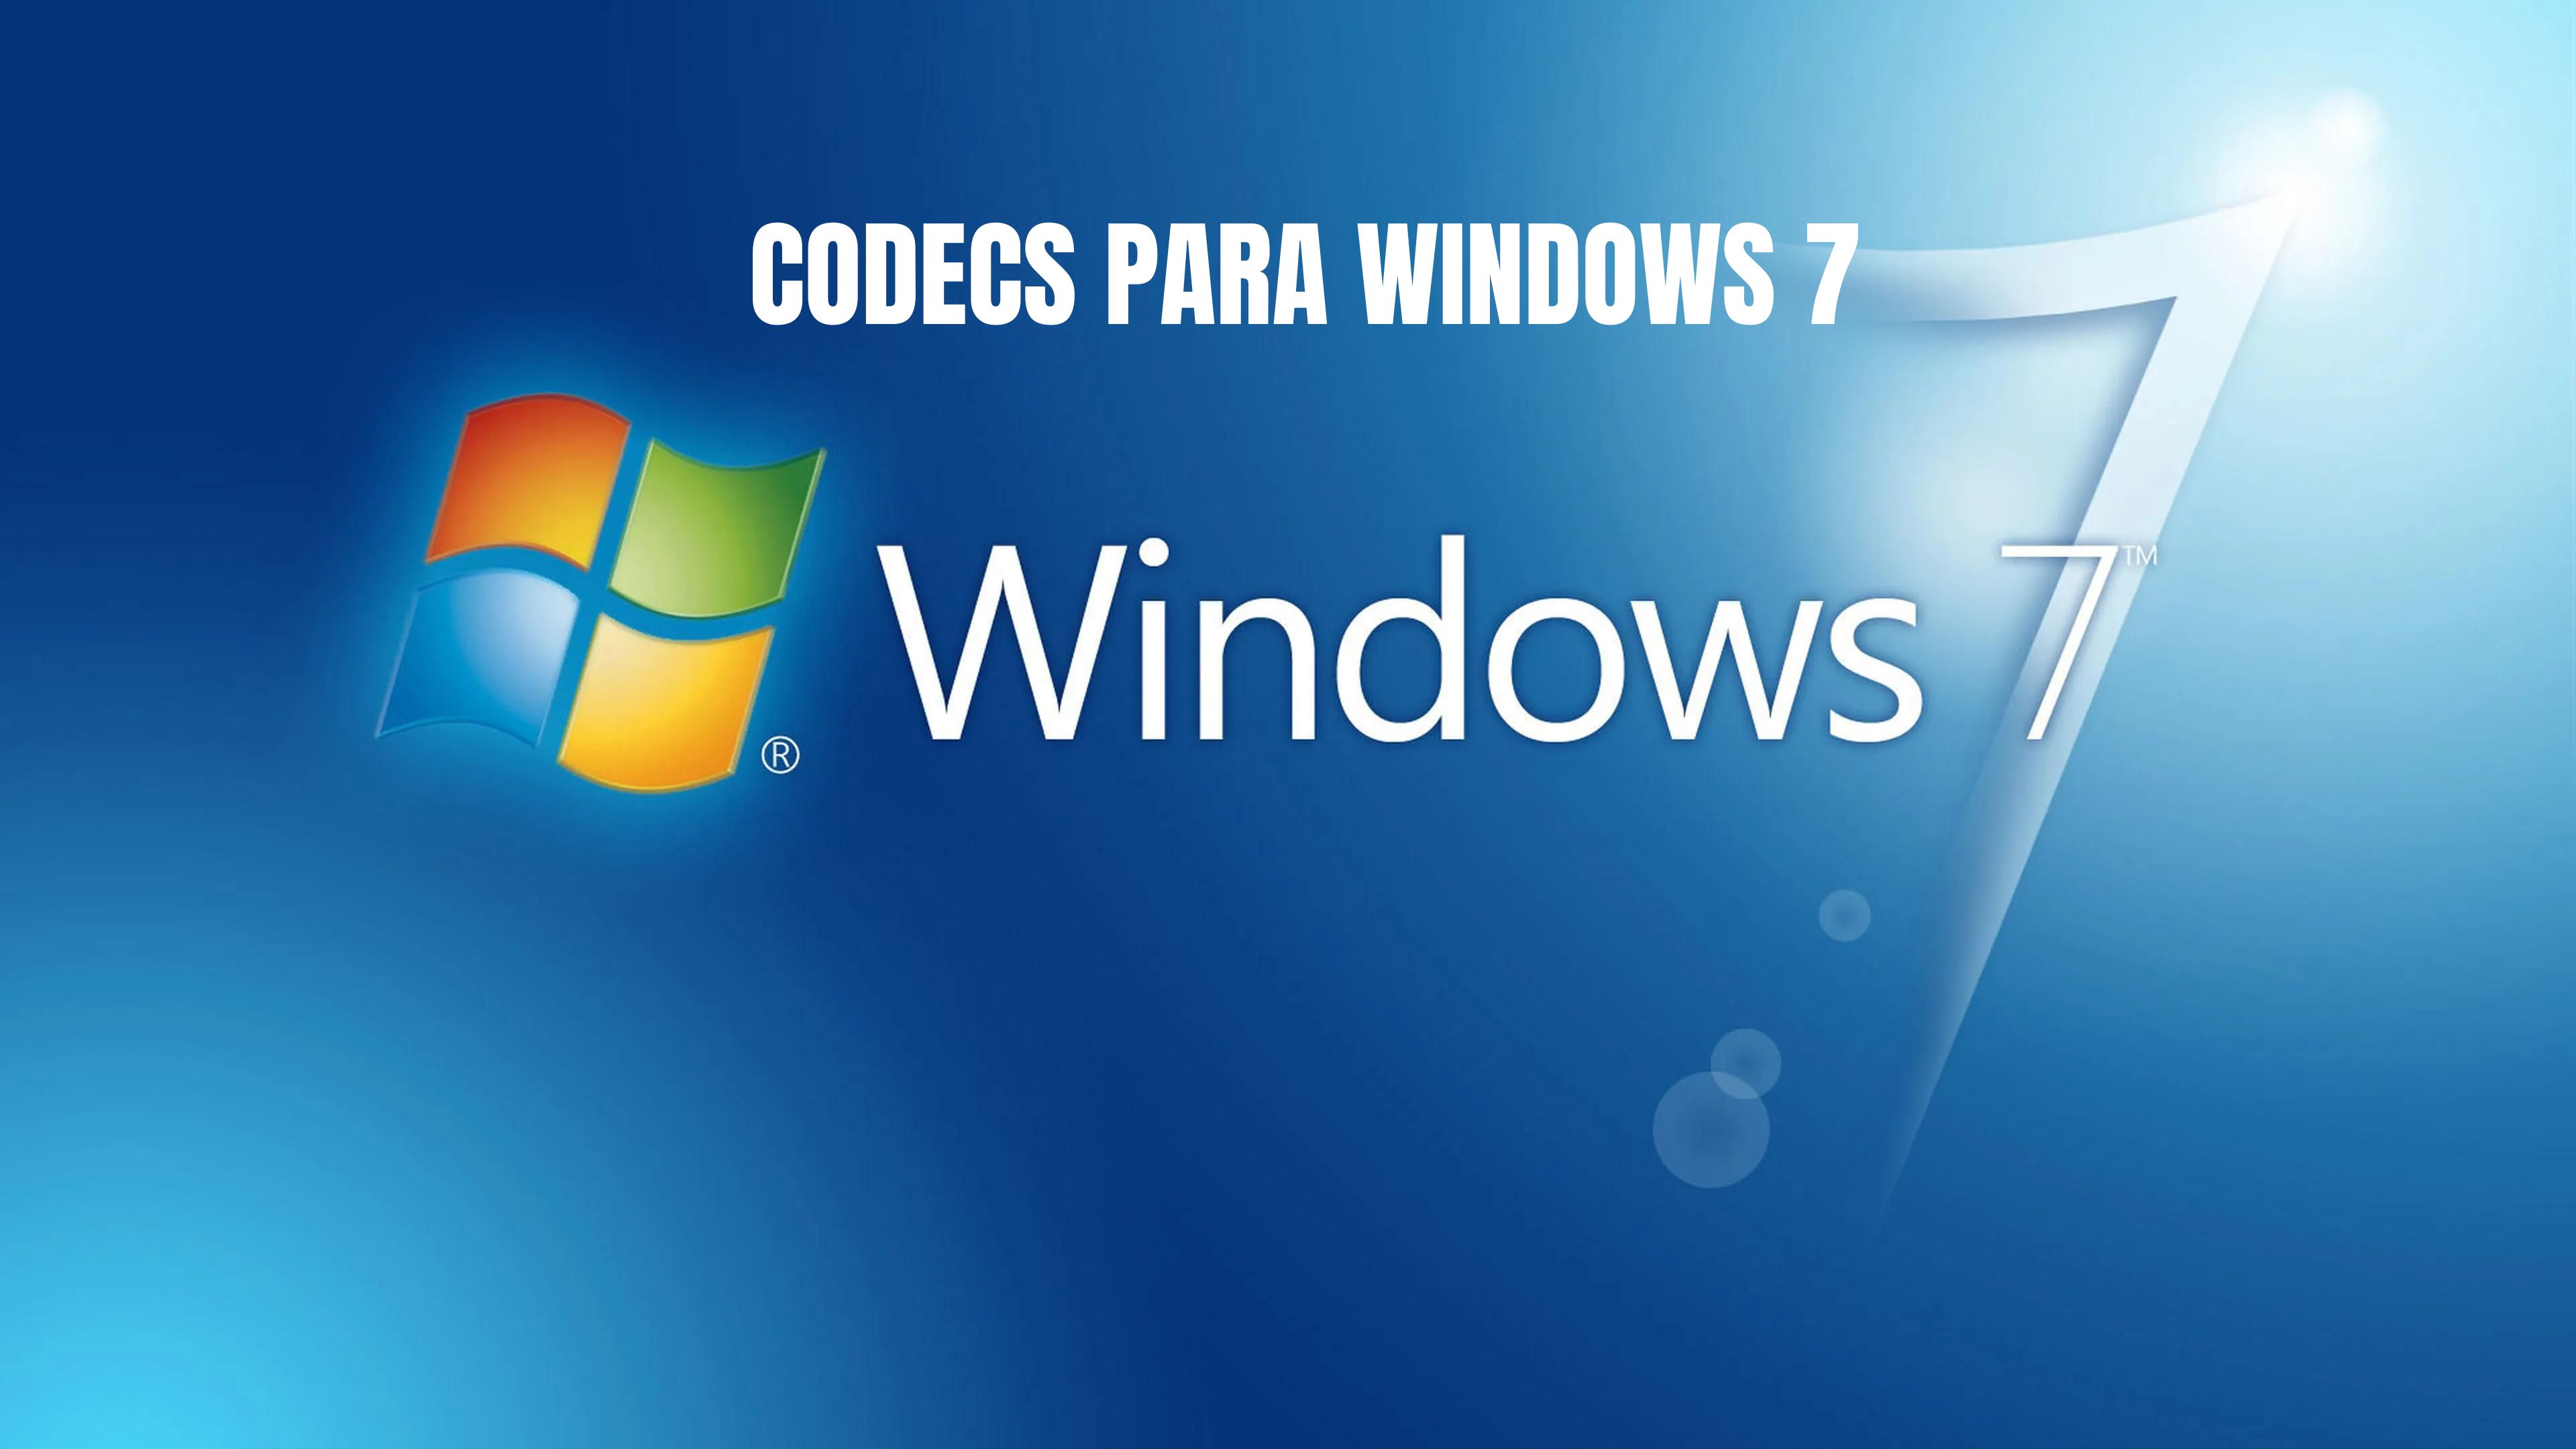 CODECS_PARA_WINDOWS_7.jpg